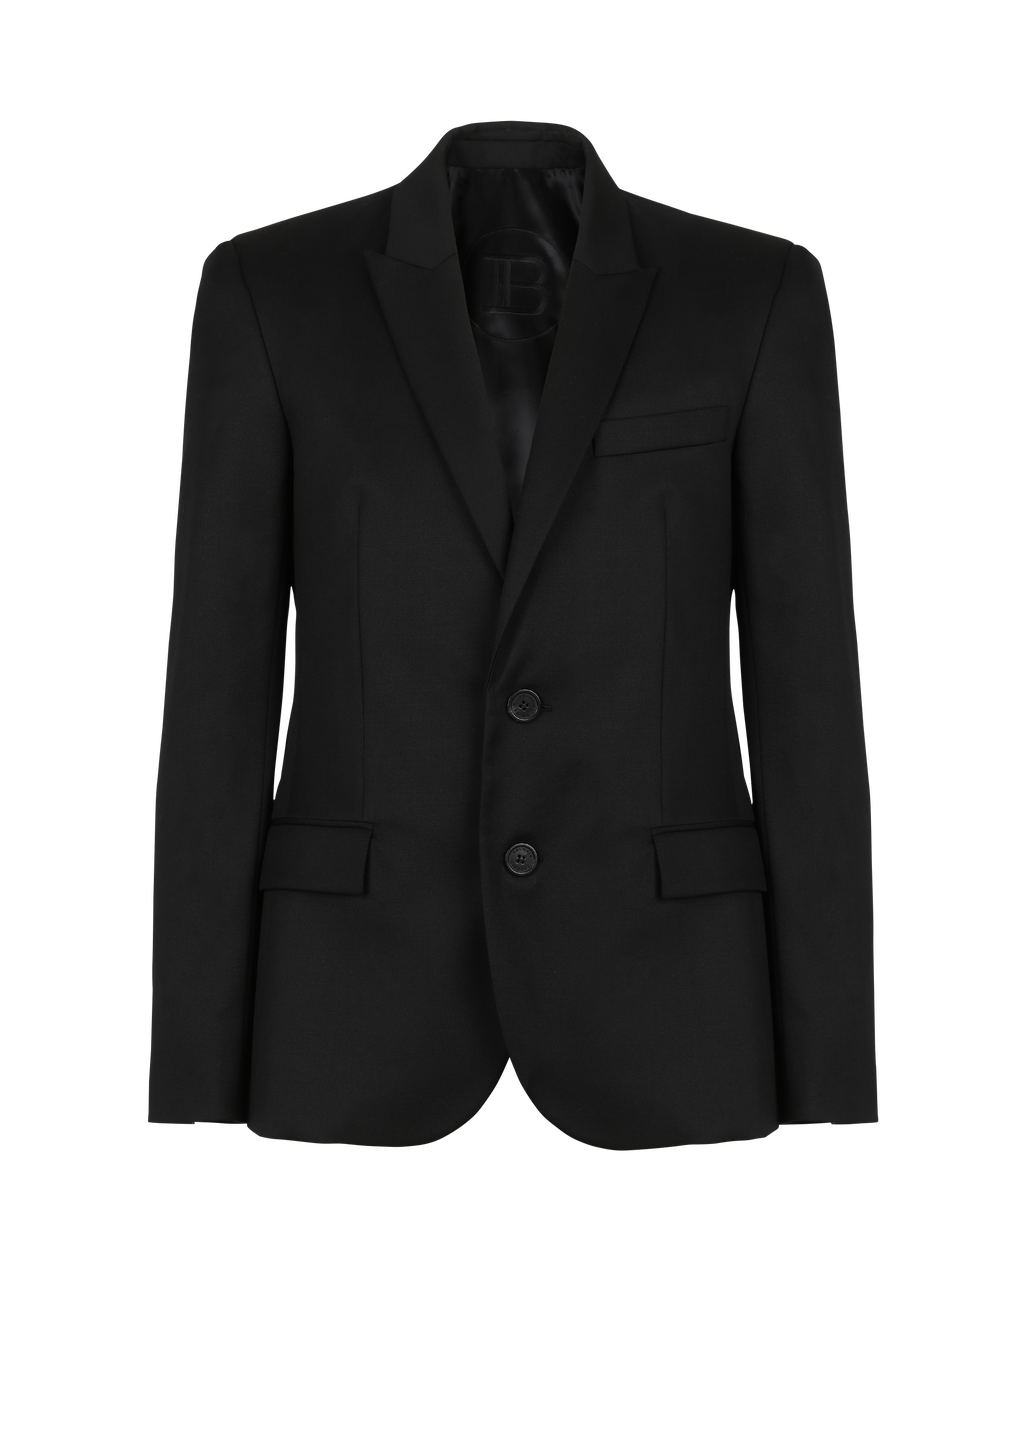 Two-button wool blazer, black, hi-res